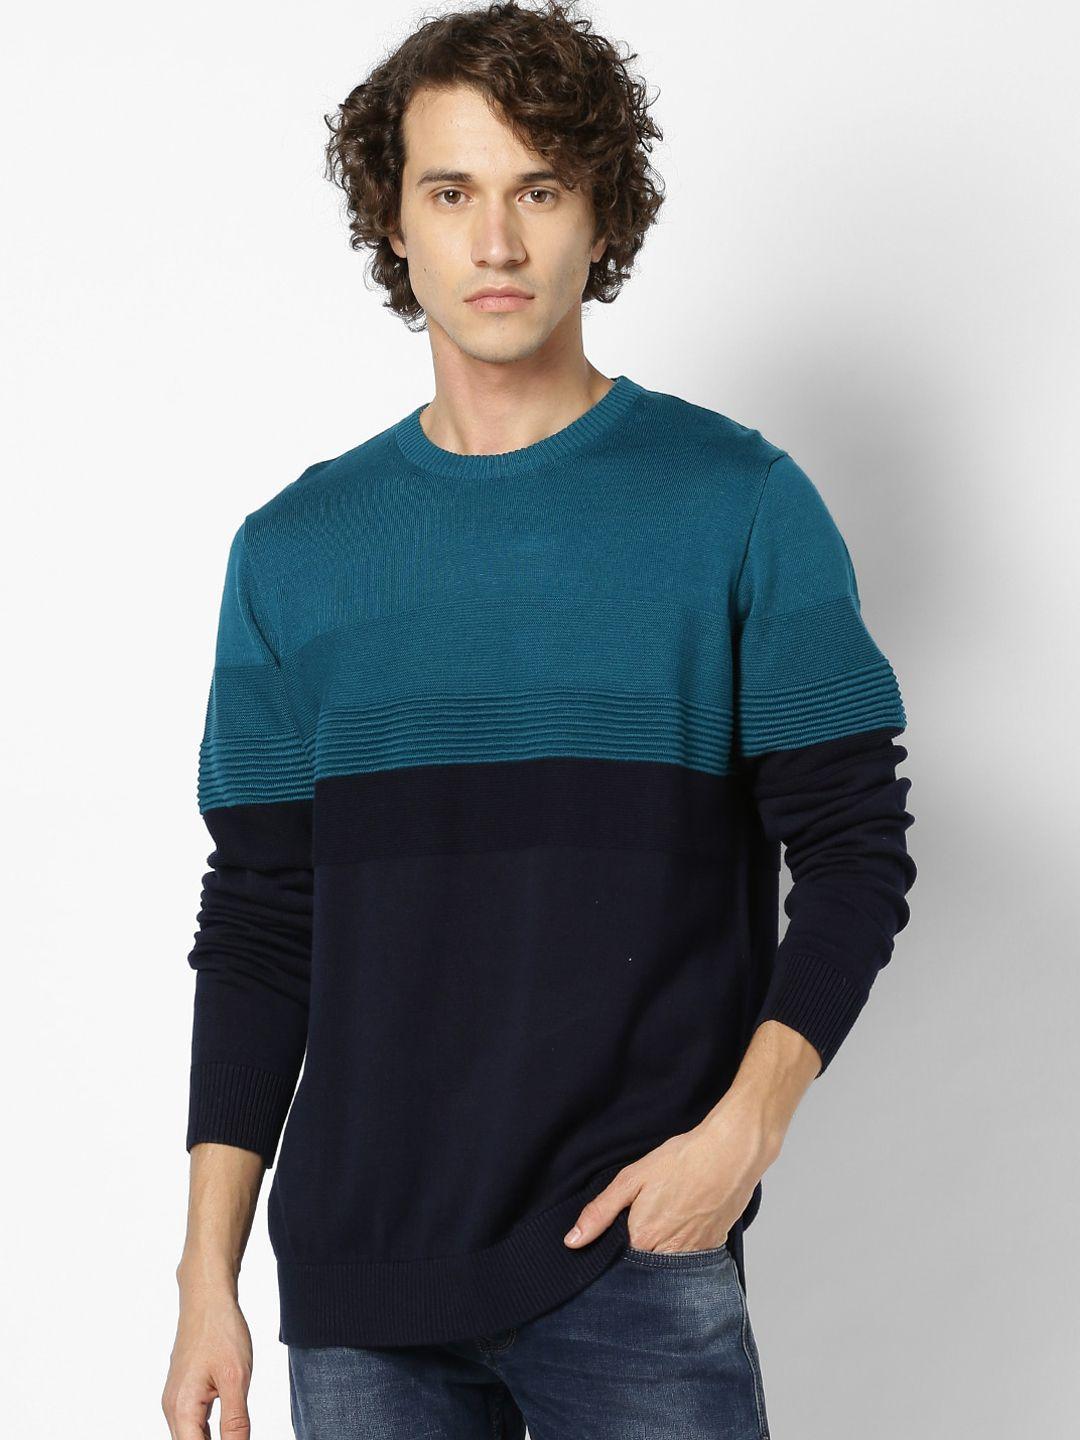 celio men teal blue & navy blue colourblocked pullover sweater